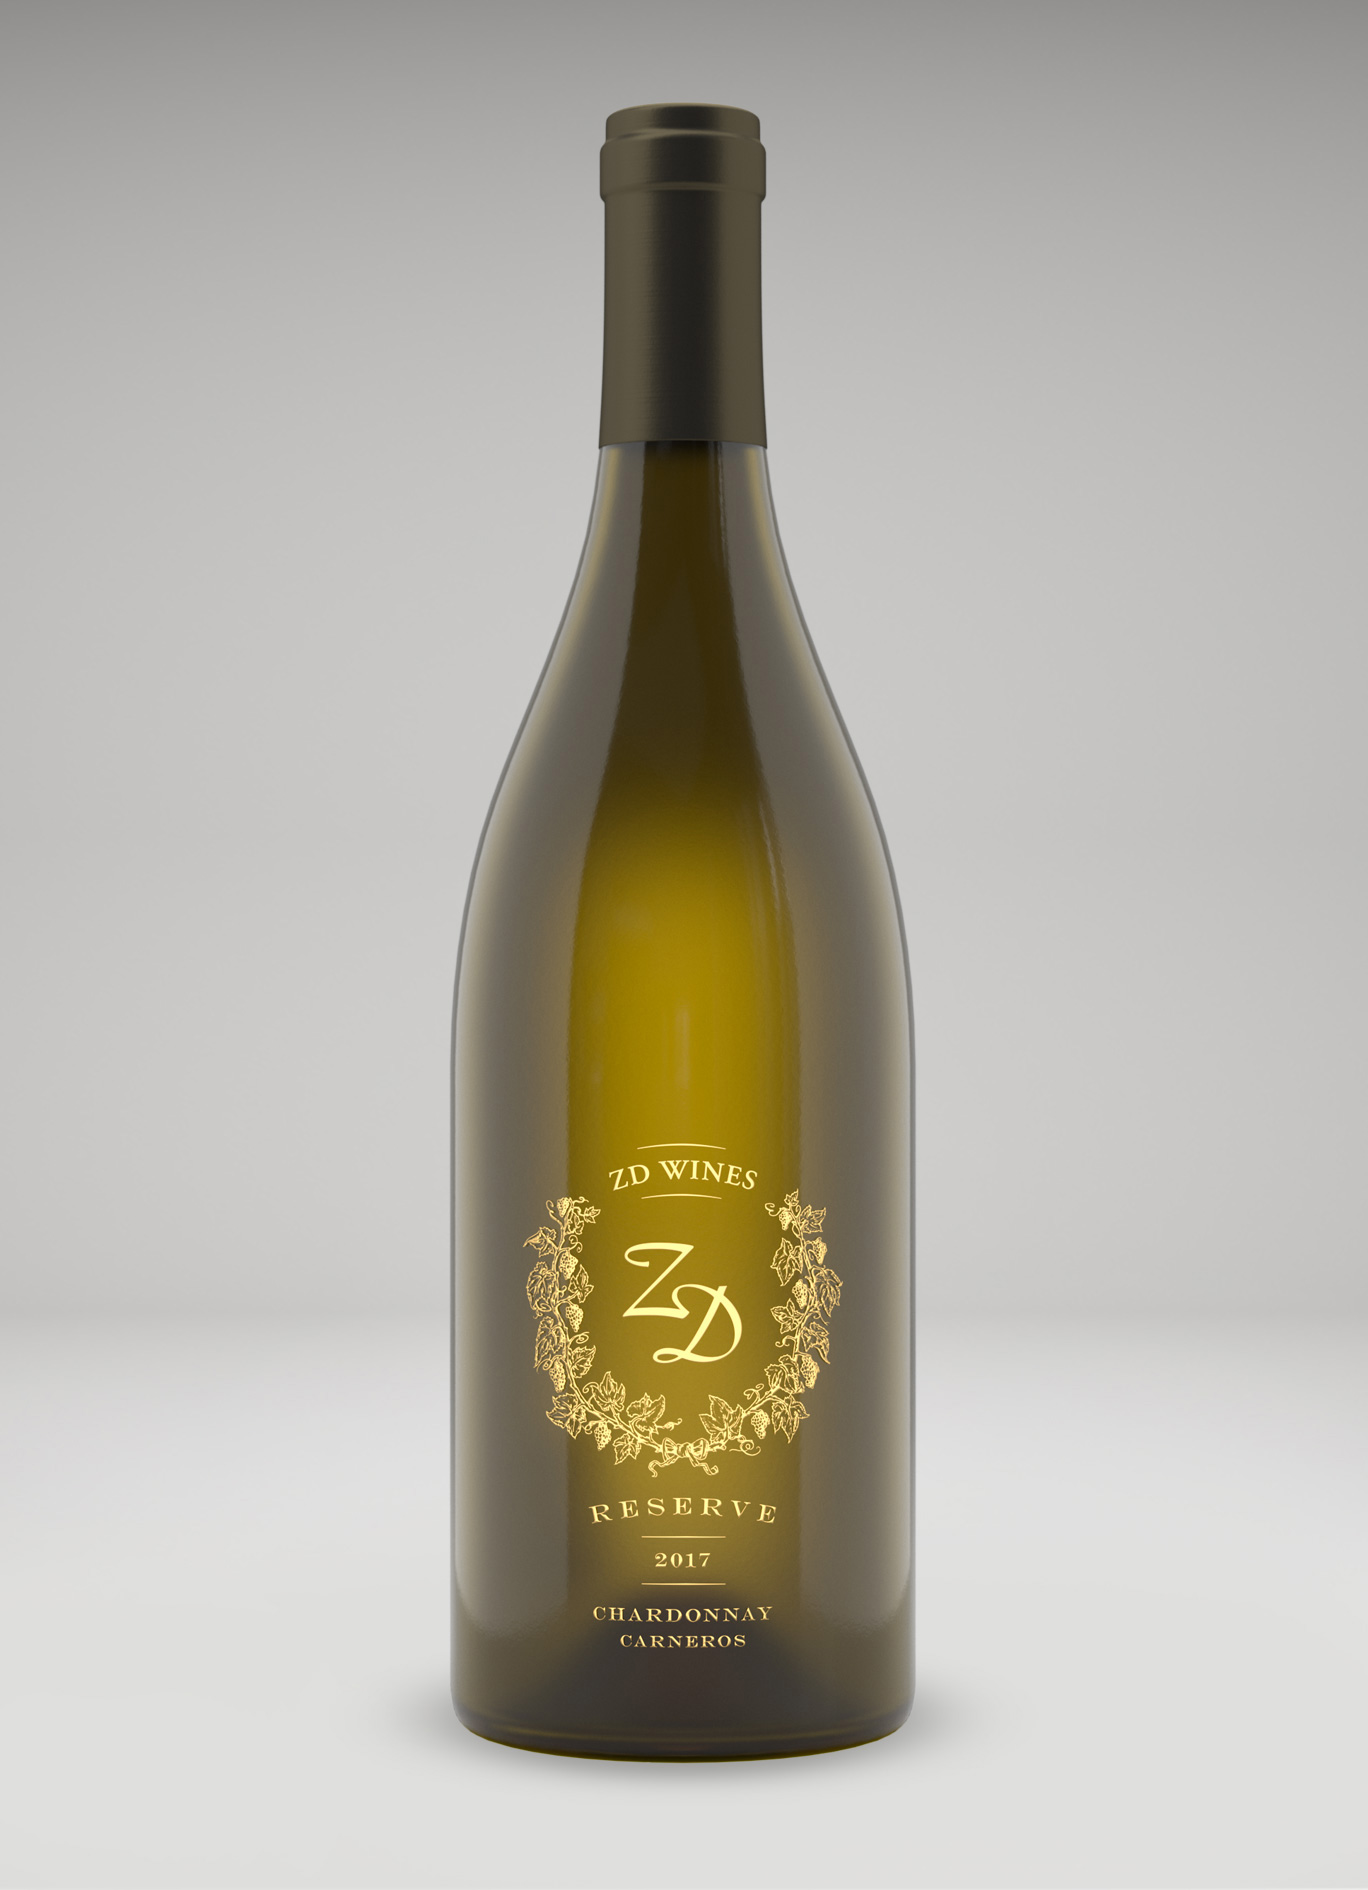 A bottle of 2017 Reserve Chardonnay, Carneros